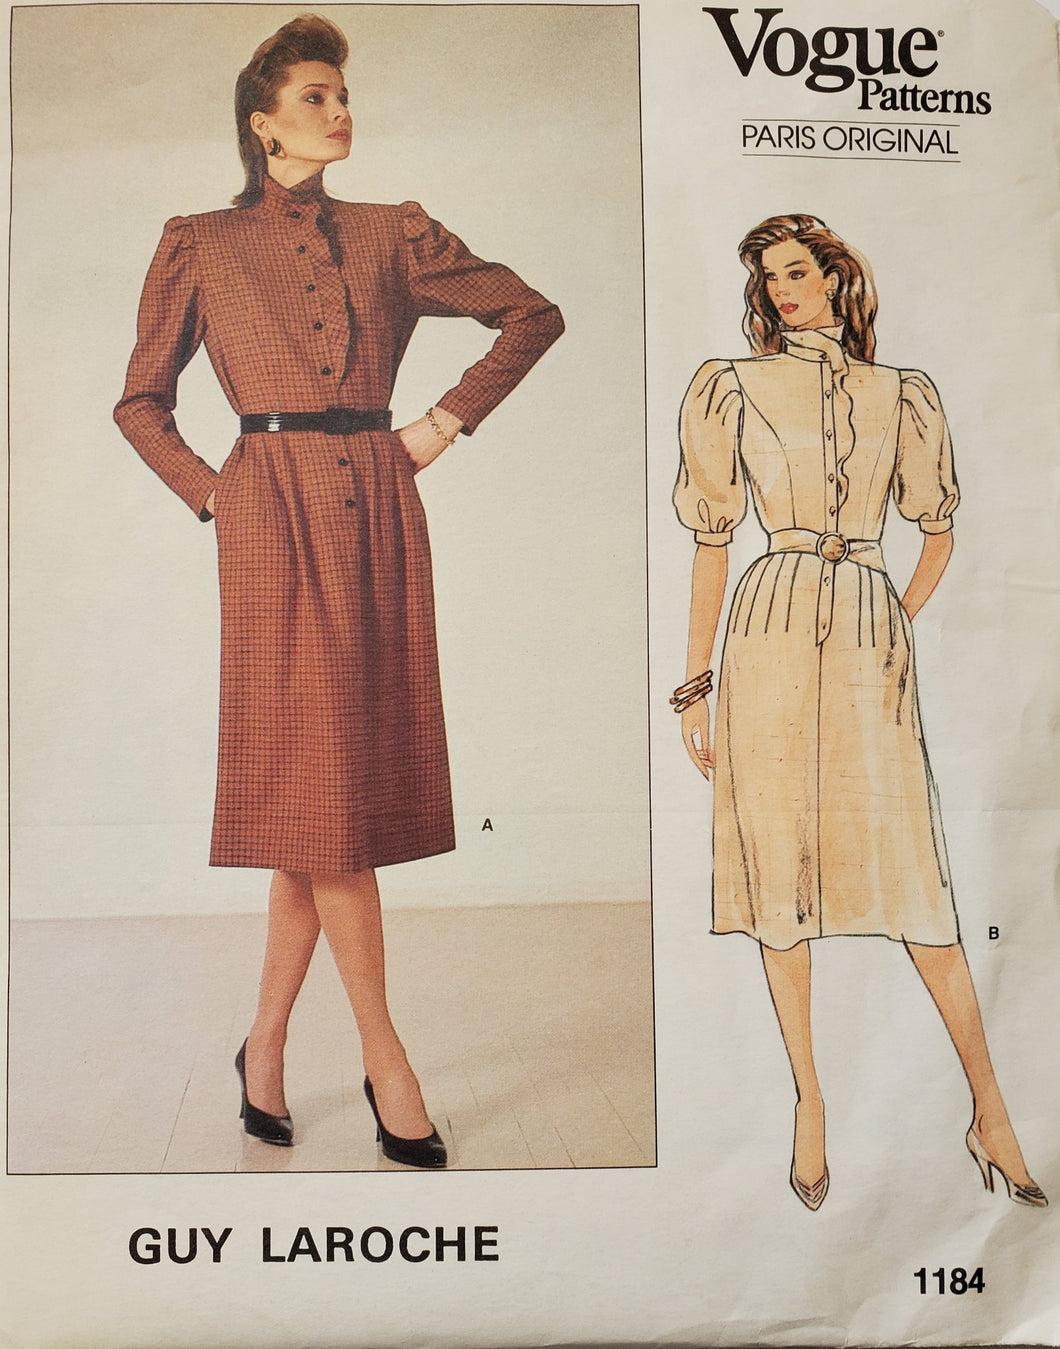 Vogue Pattern 1184, UNCUT, Vogue American Designer Guy Larouche Vogue Dress Size 10, Vintage